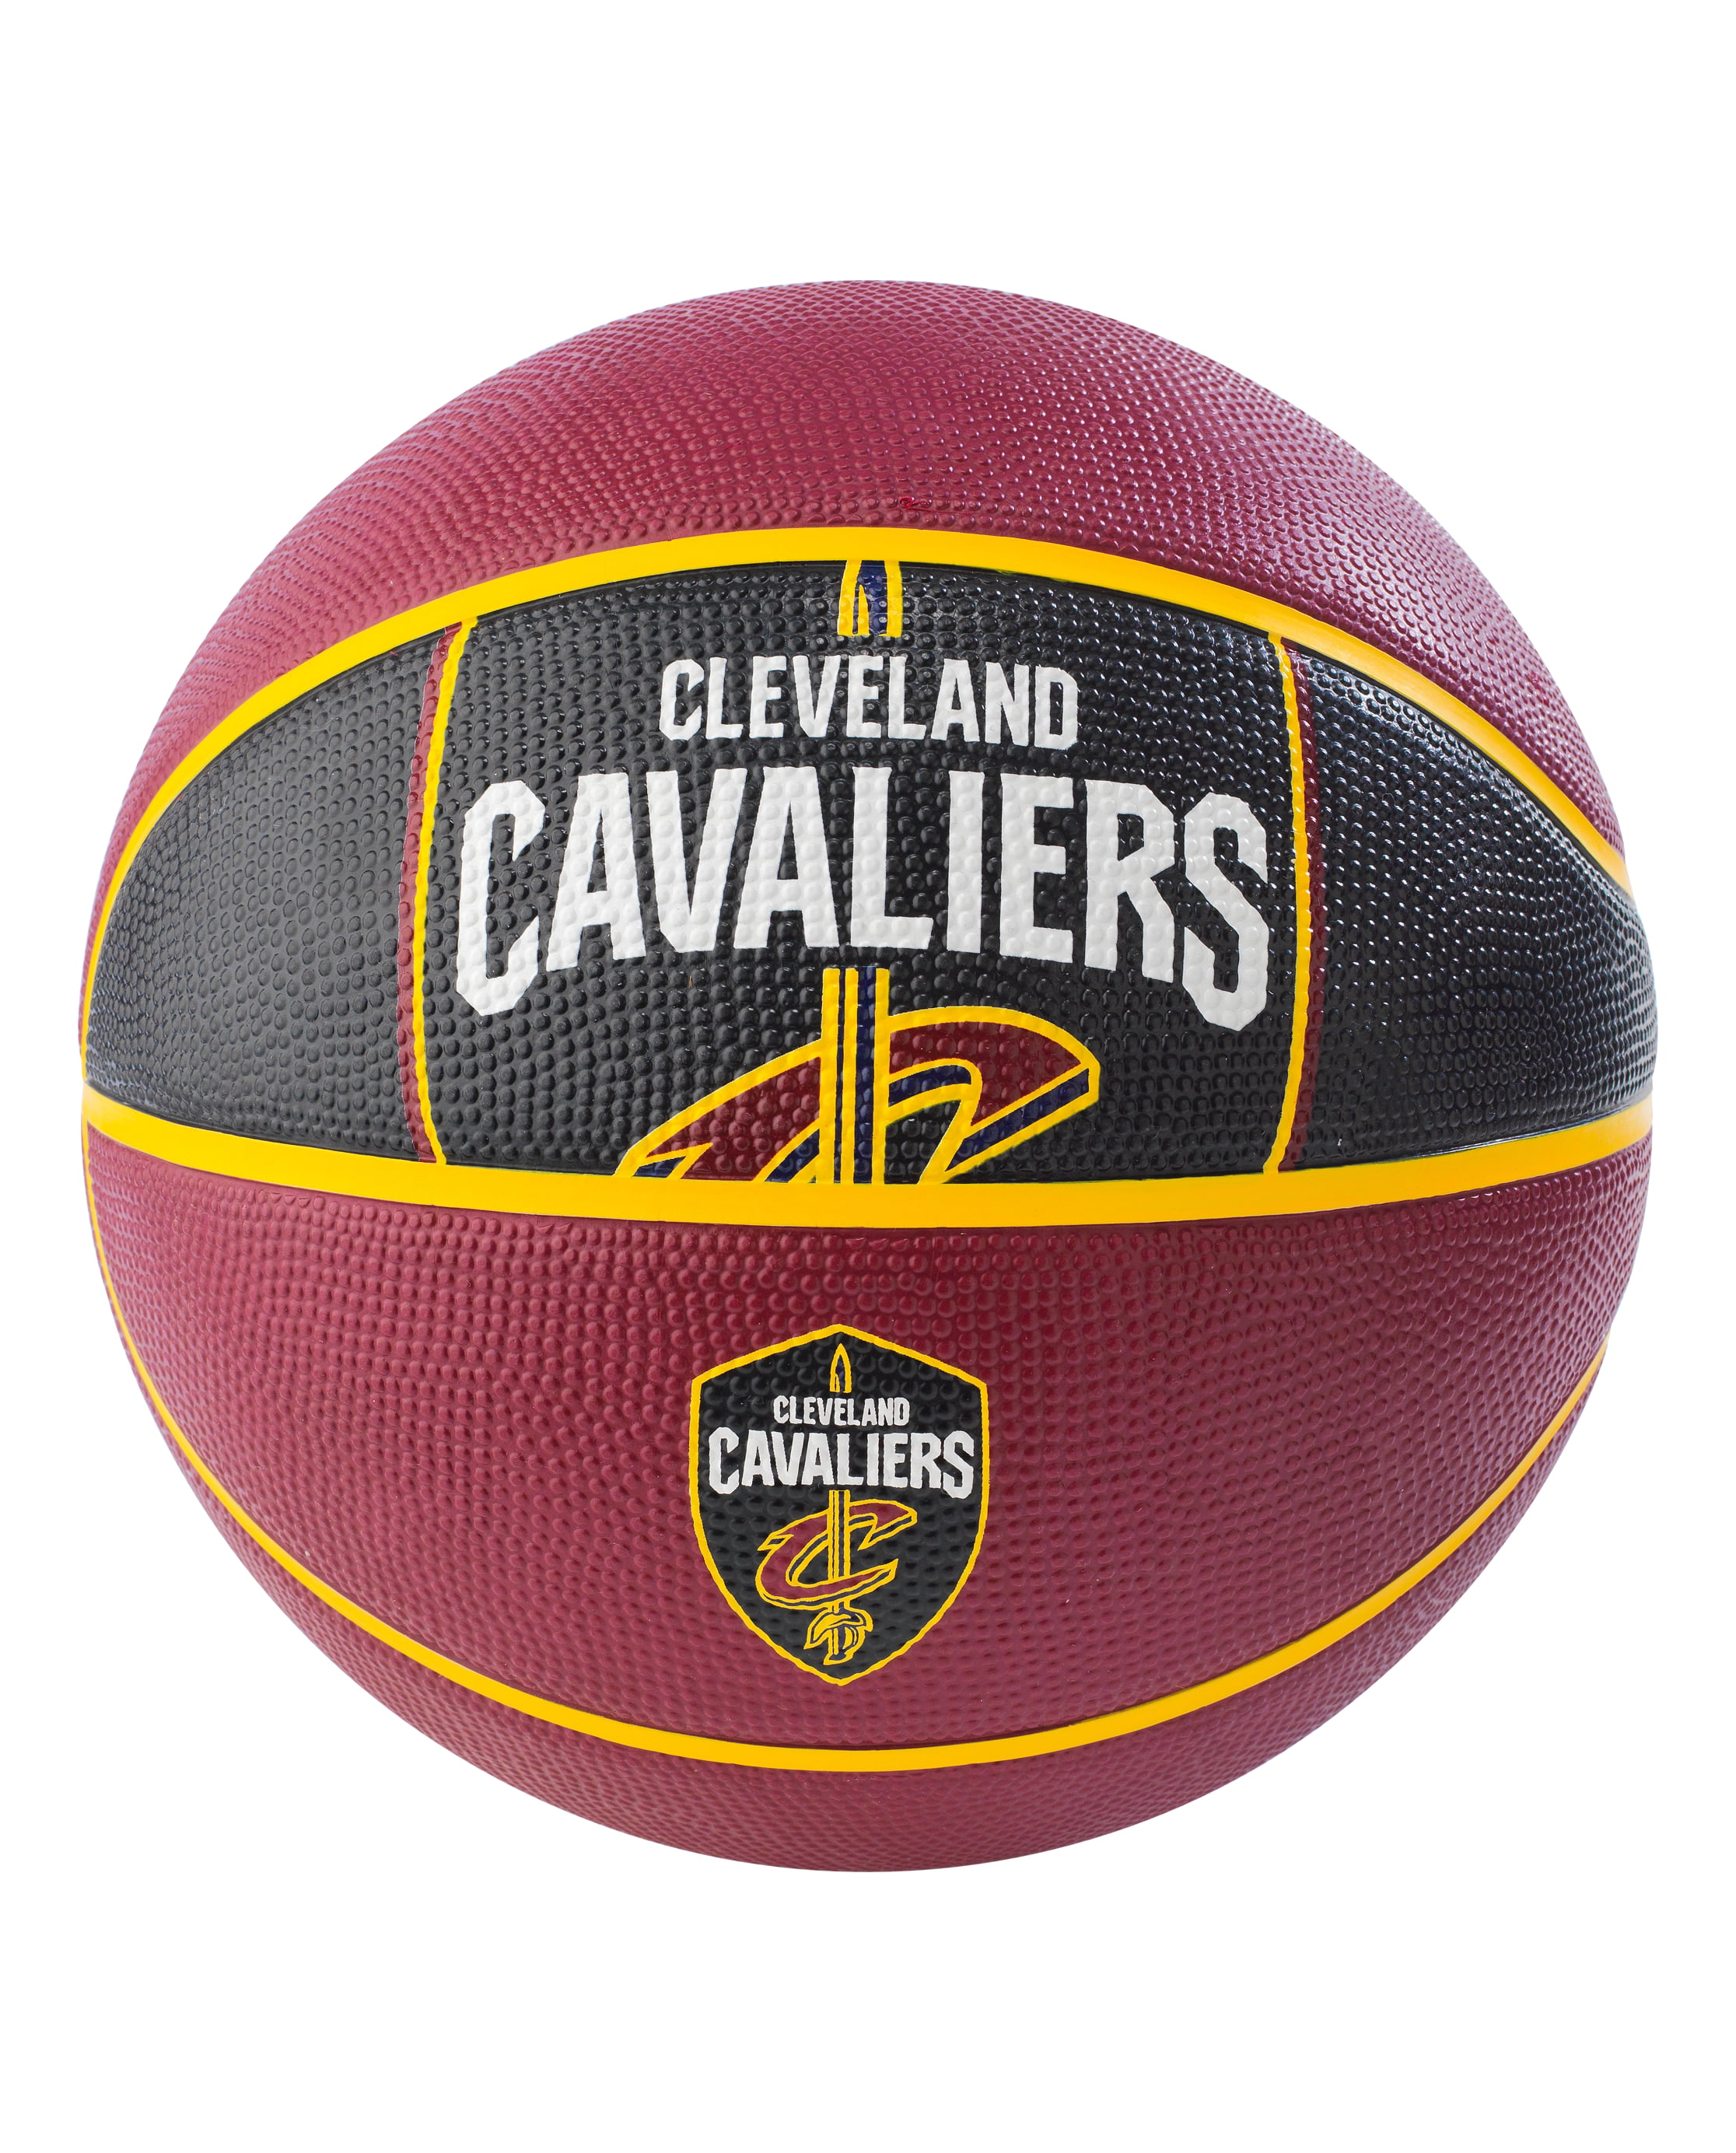 Spalding NBA Cleveland Cavaliers Team Logo Basketball